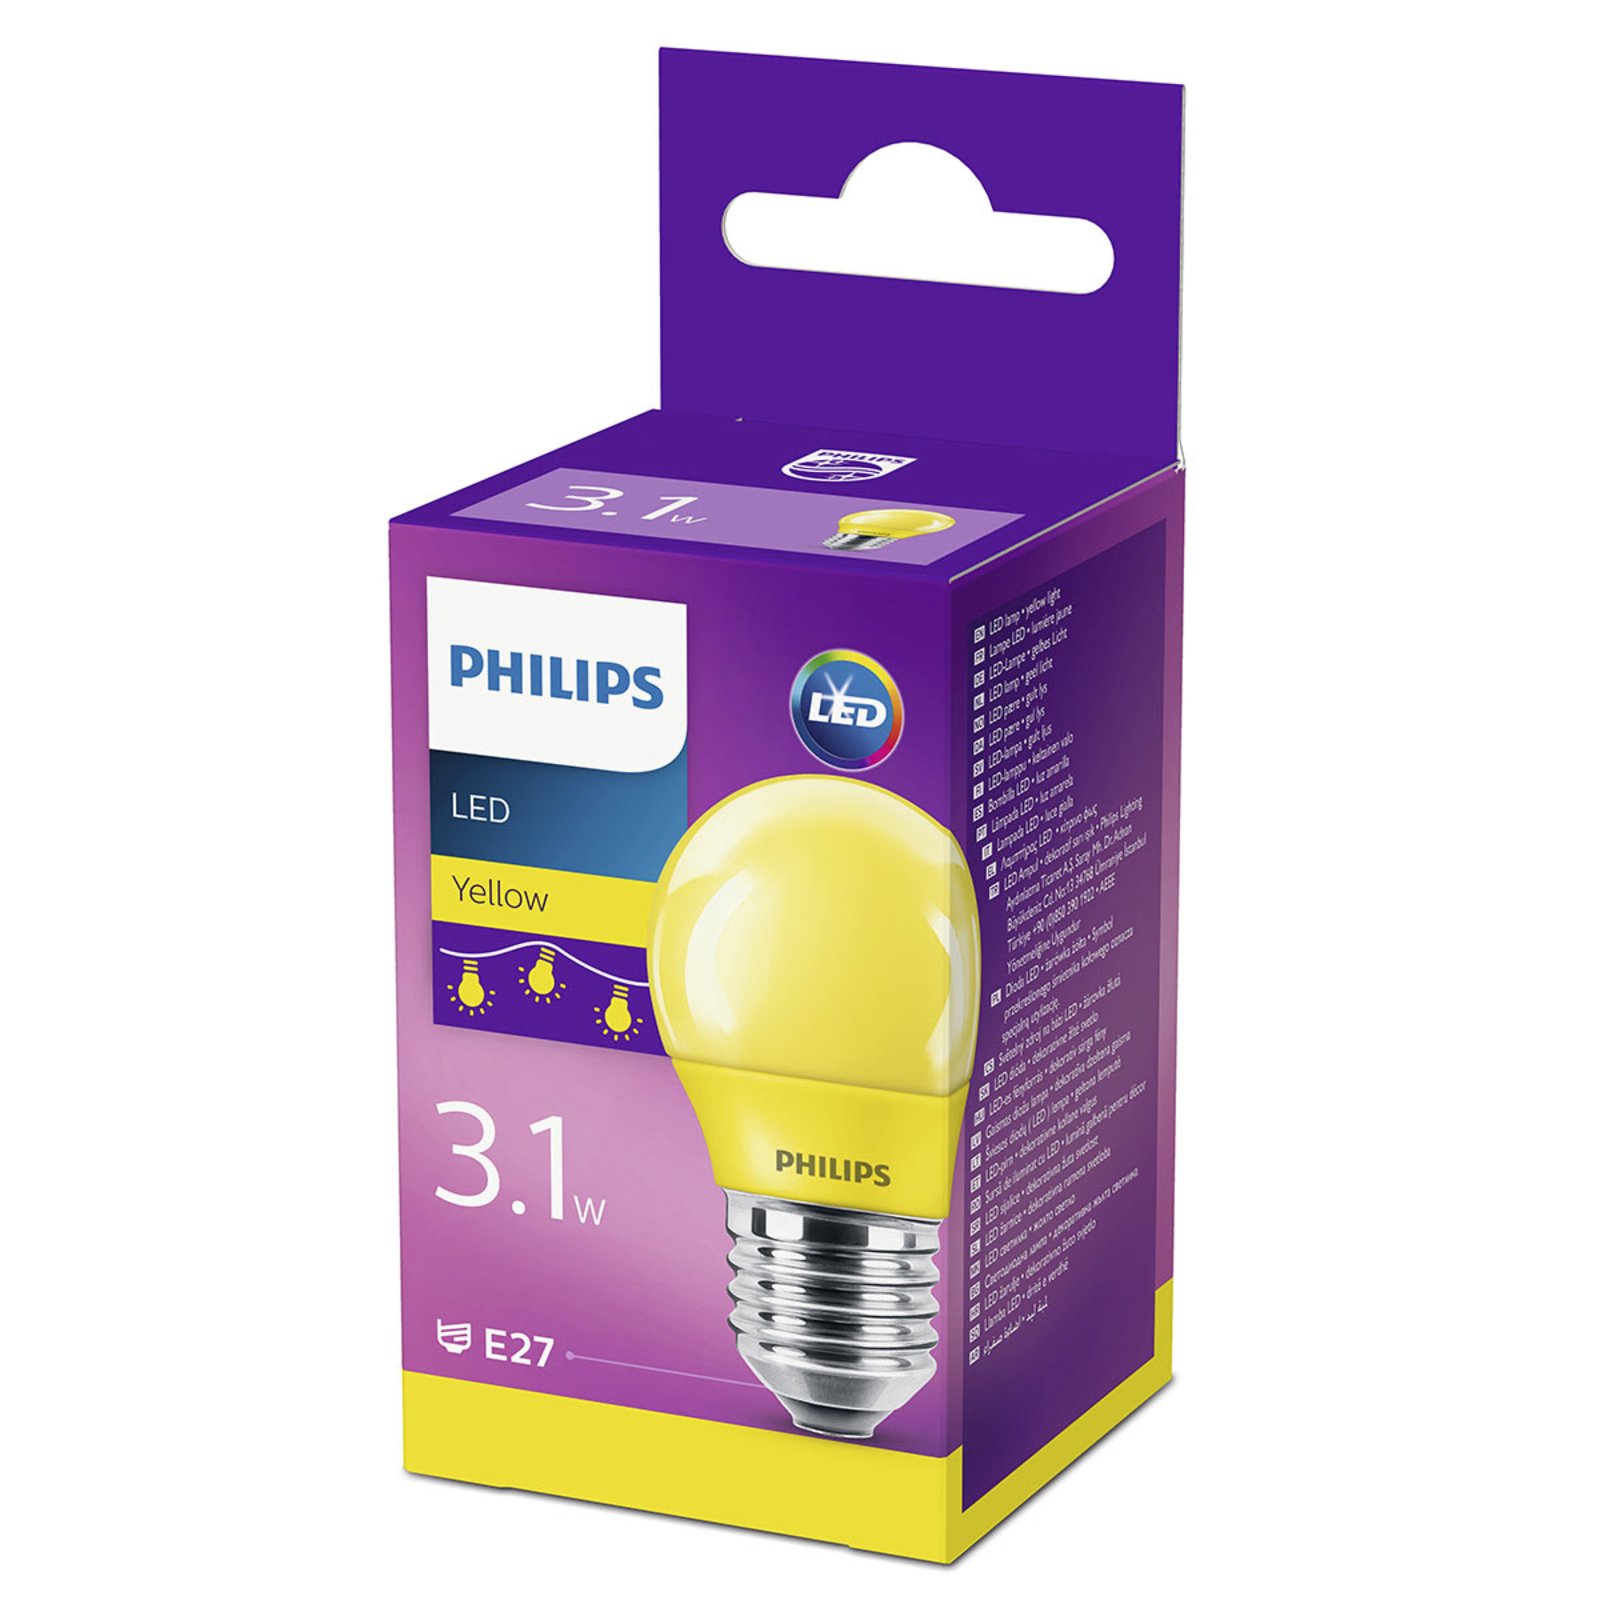 E27 P45 LED bulb 3.1 W, yellow